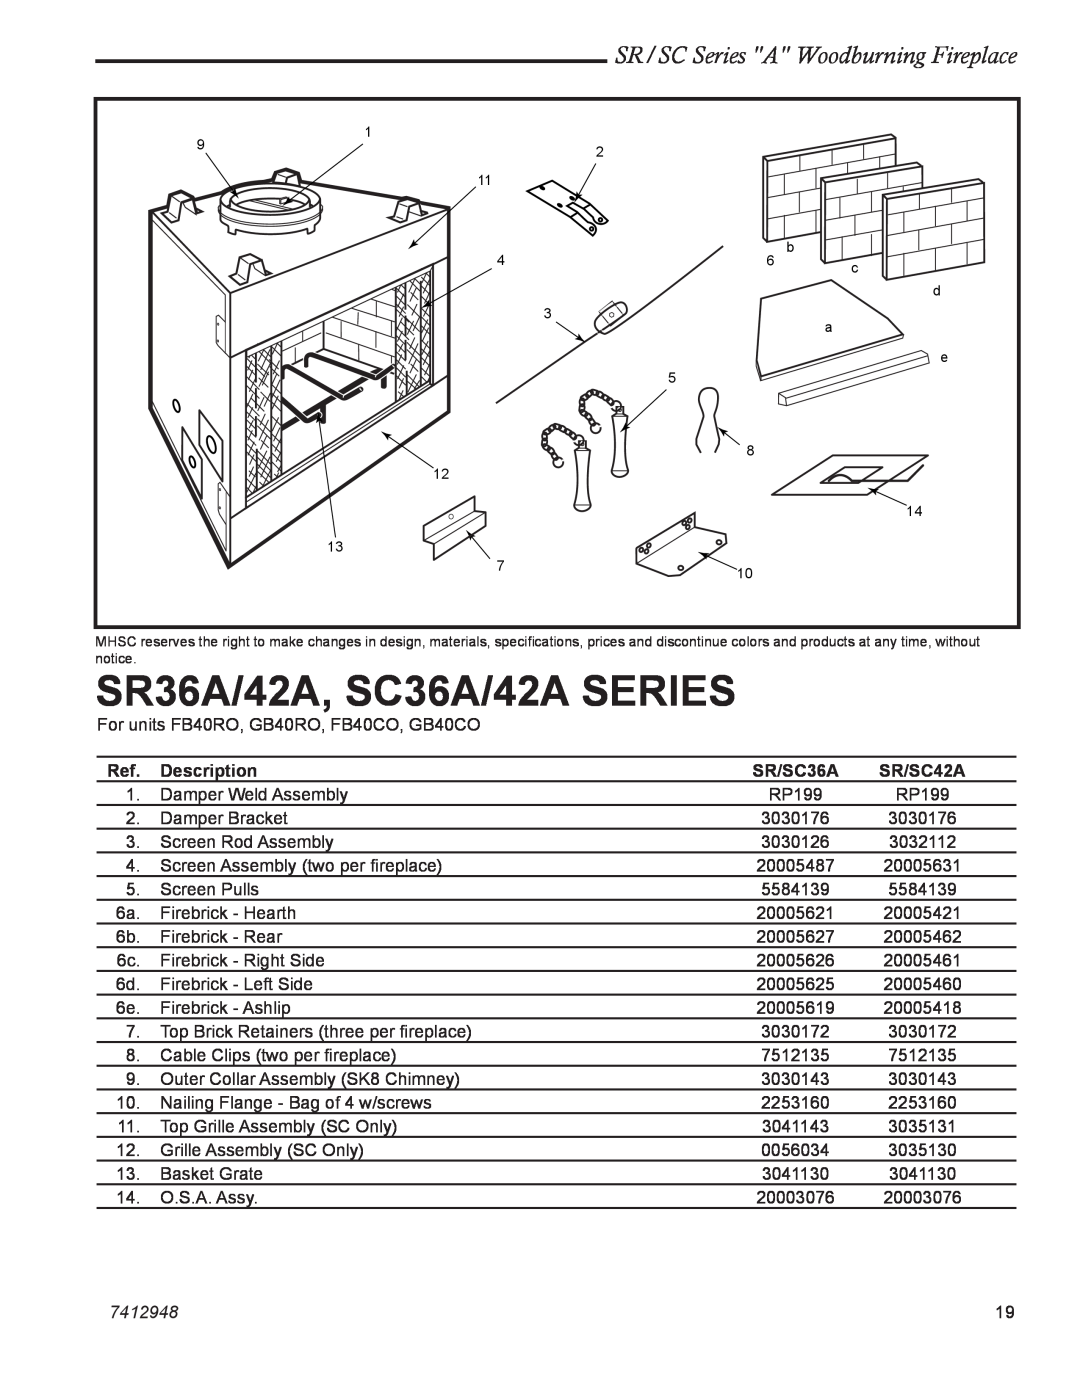 Majestic SR36A/42A, SC36A/42A SERIES, SR/SC Series A Woodburning Fireplace, Description, SR/SC36A, SR/SC42A, 7412948 